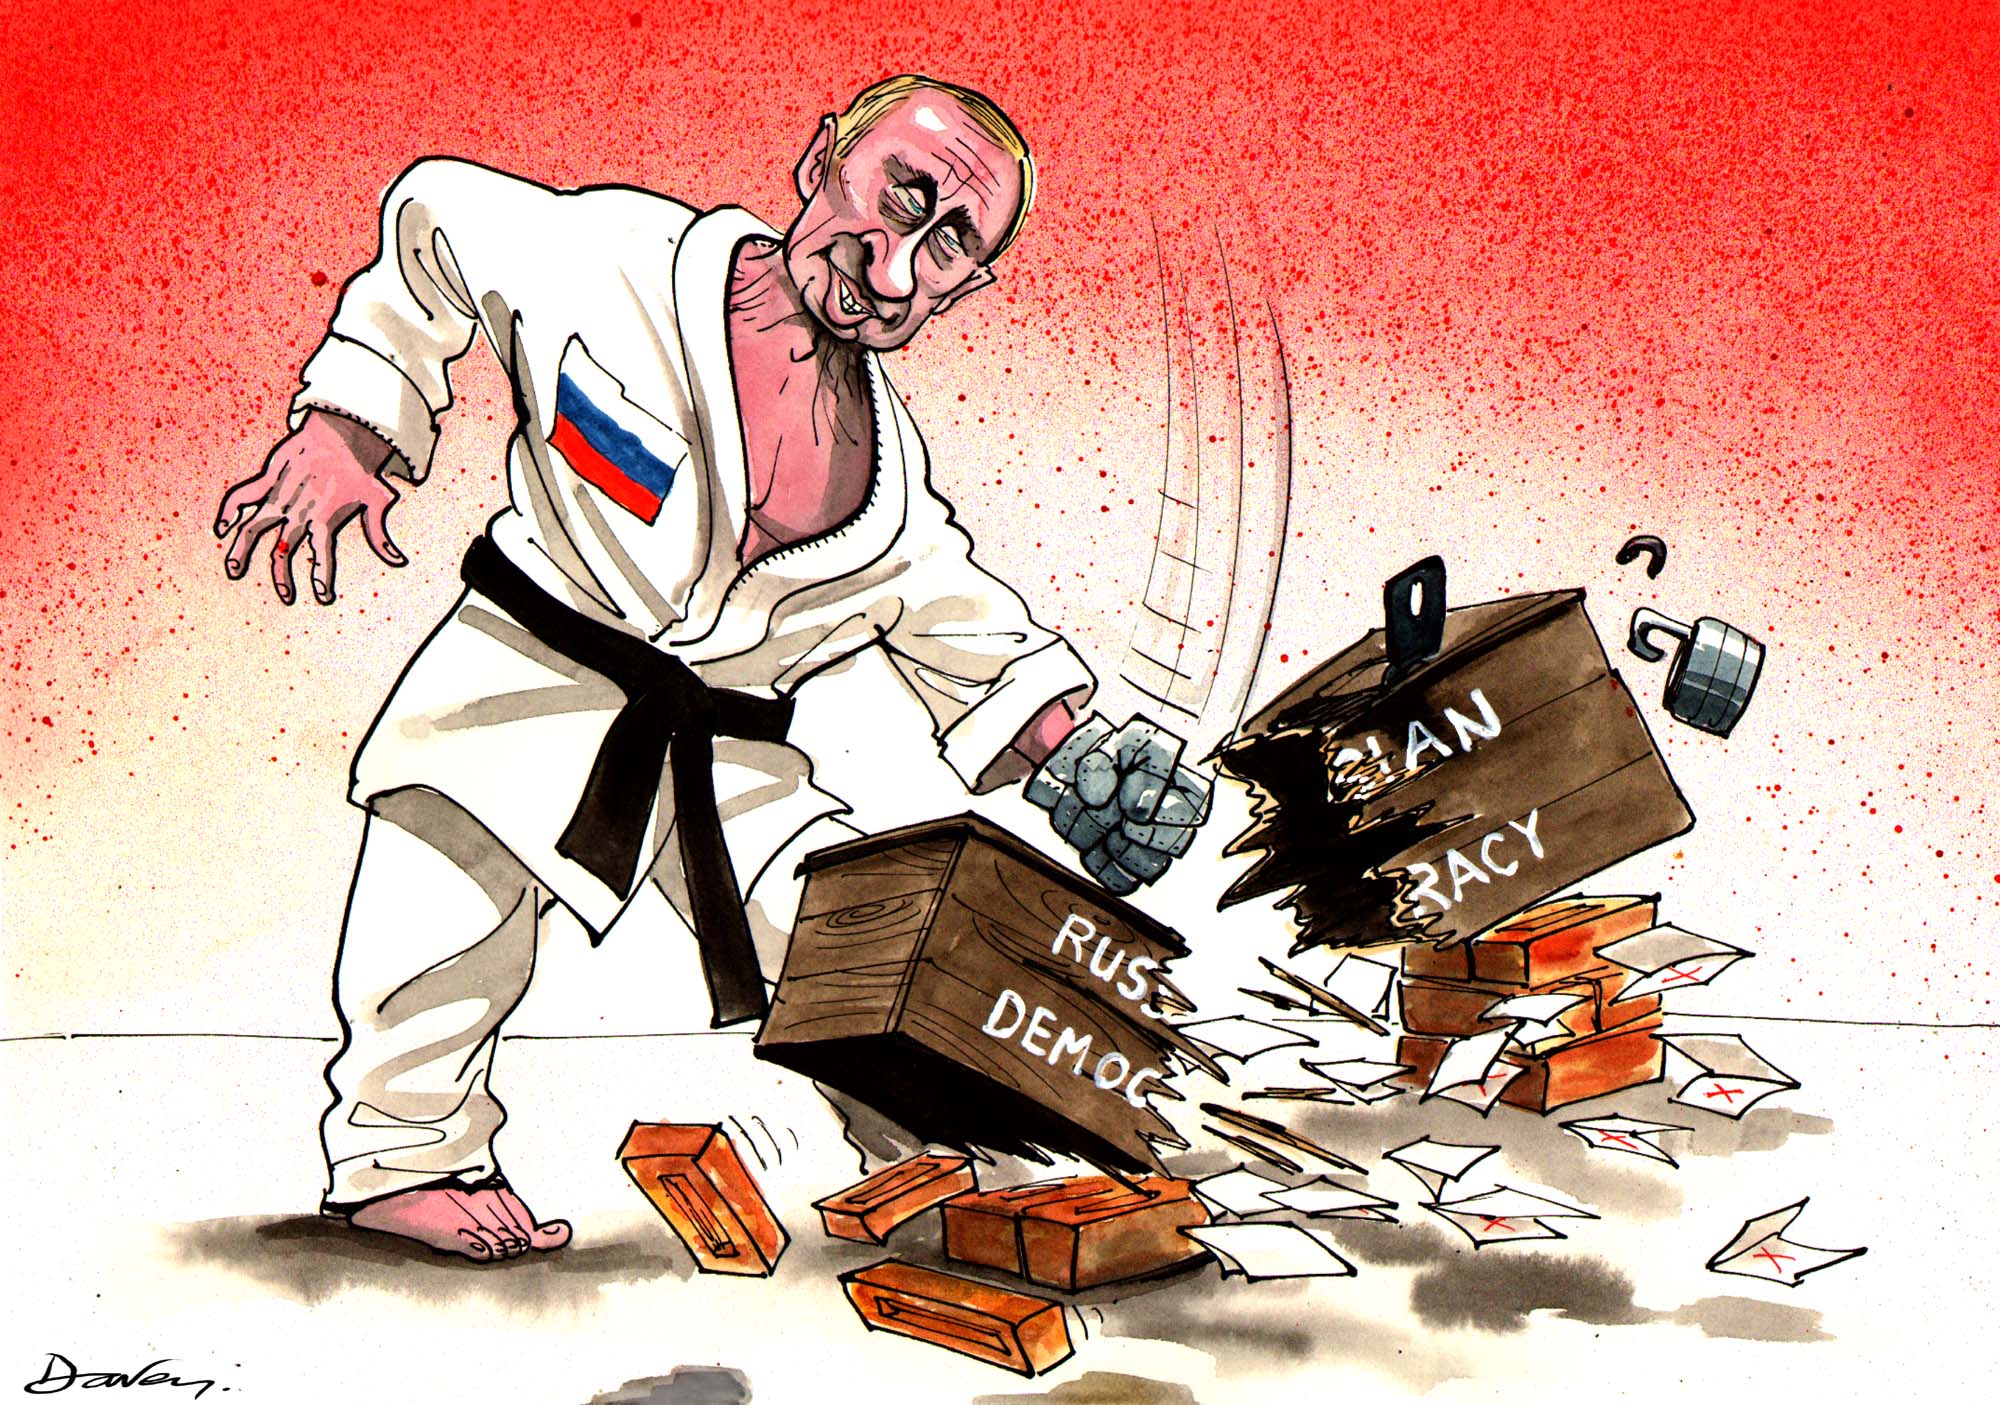 Putin democracy